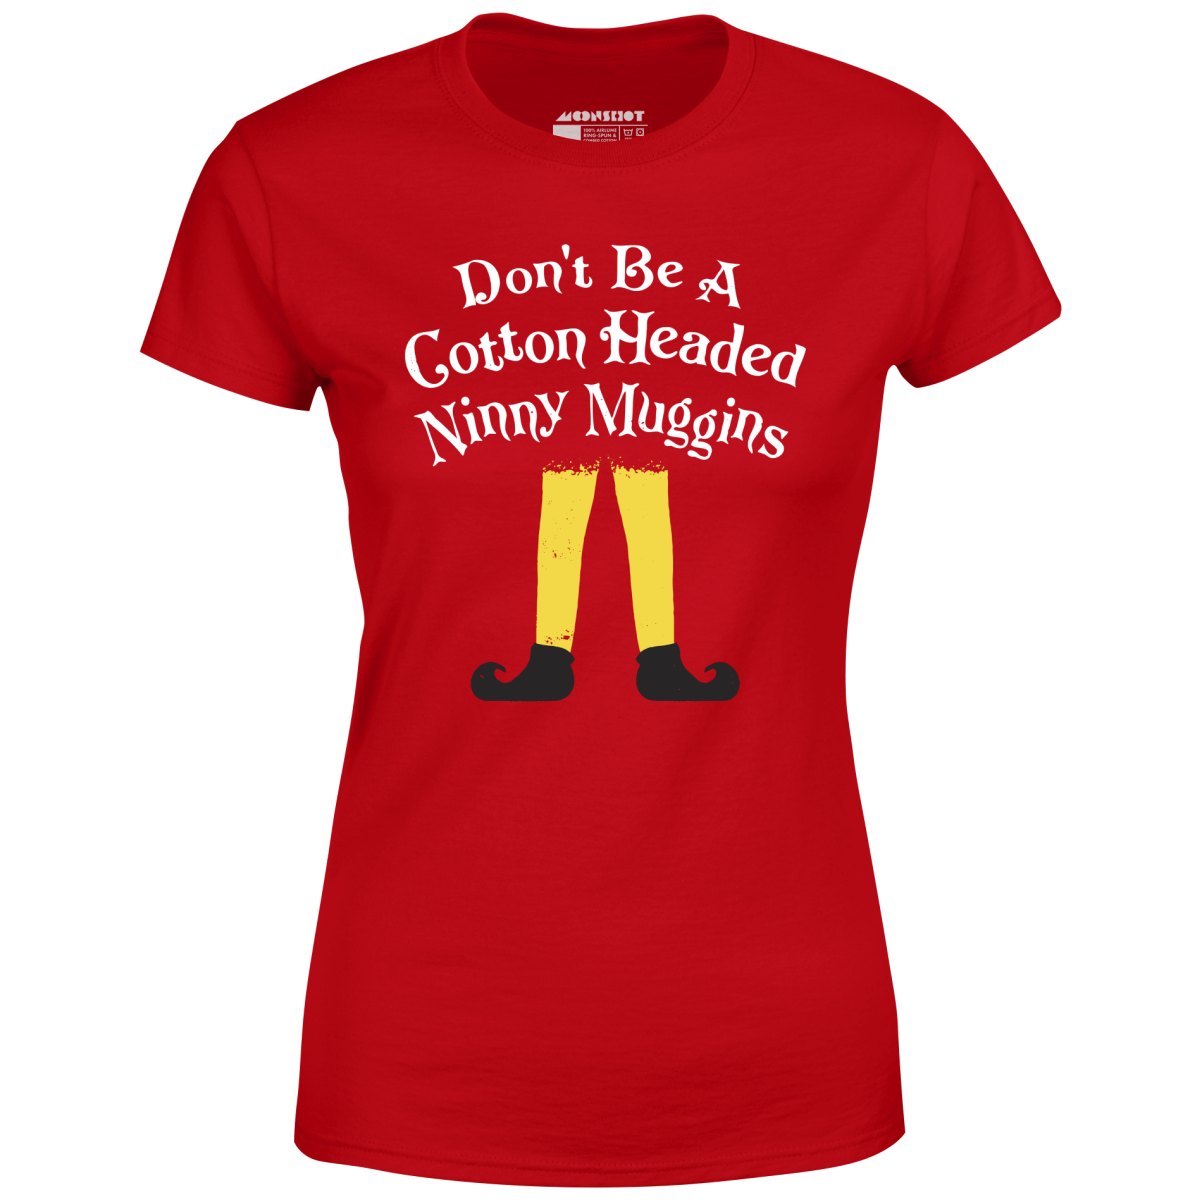 Don't Be a Cotton Headed Ninny Muggins - Women's T-Shirt